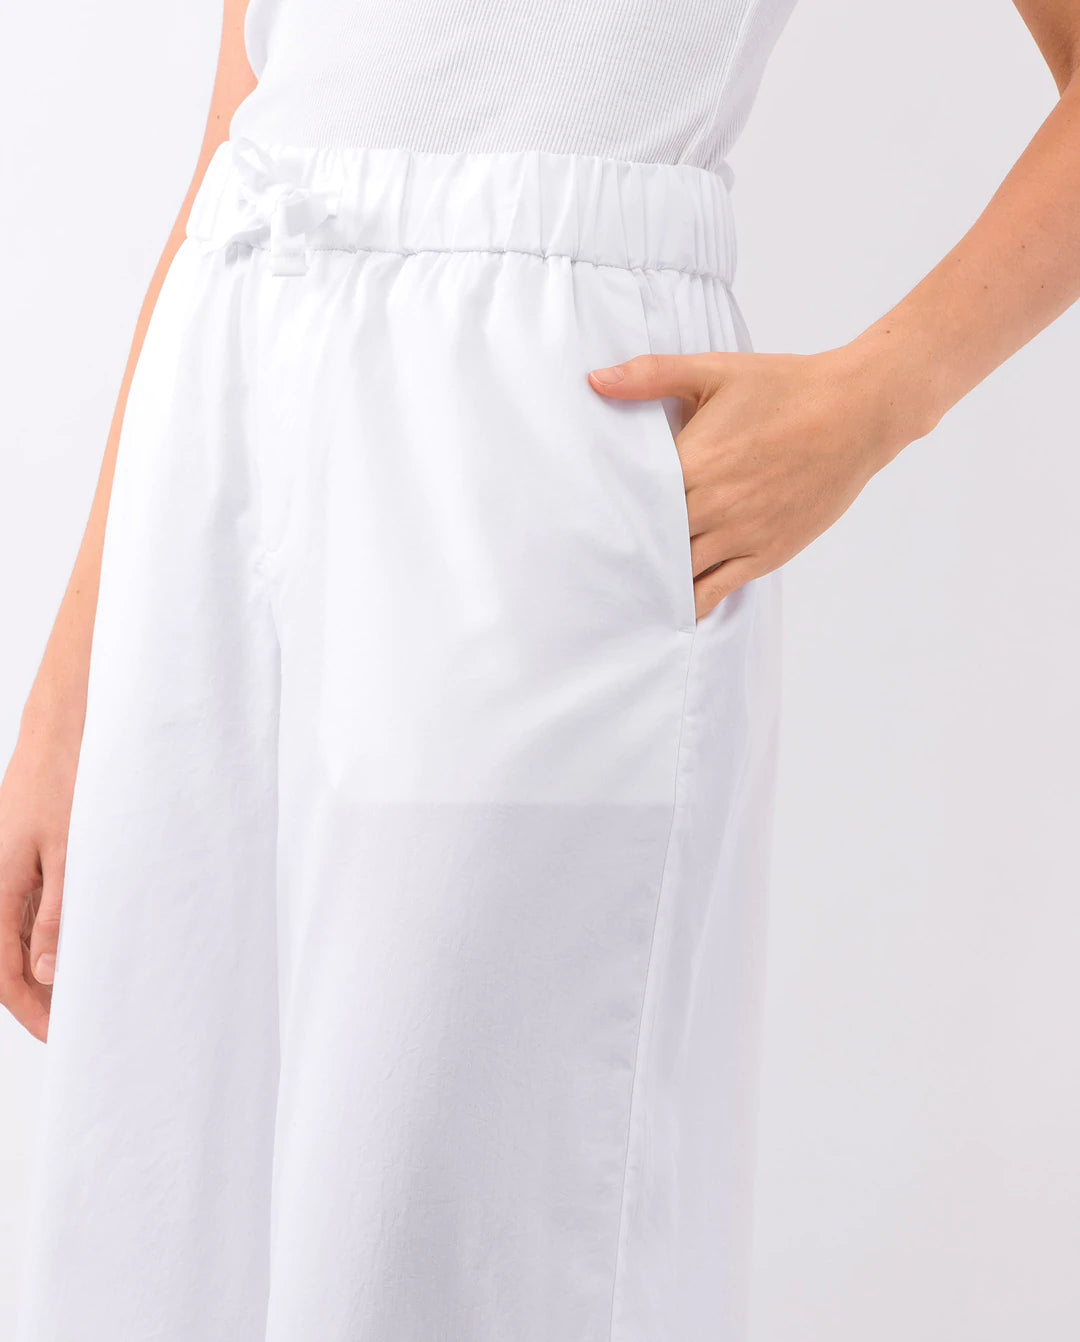 Drawstring cotton pants in white